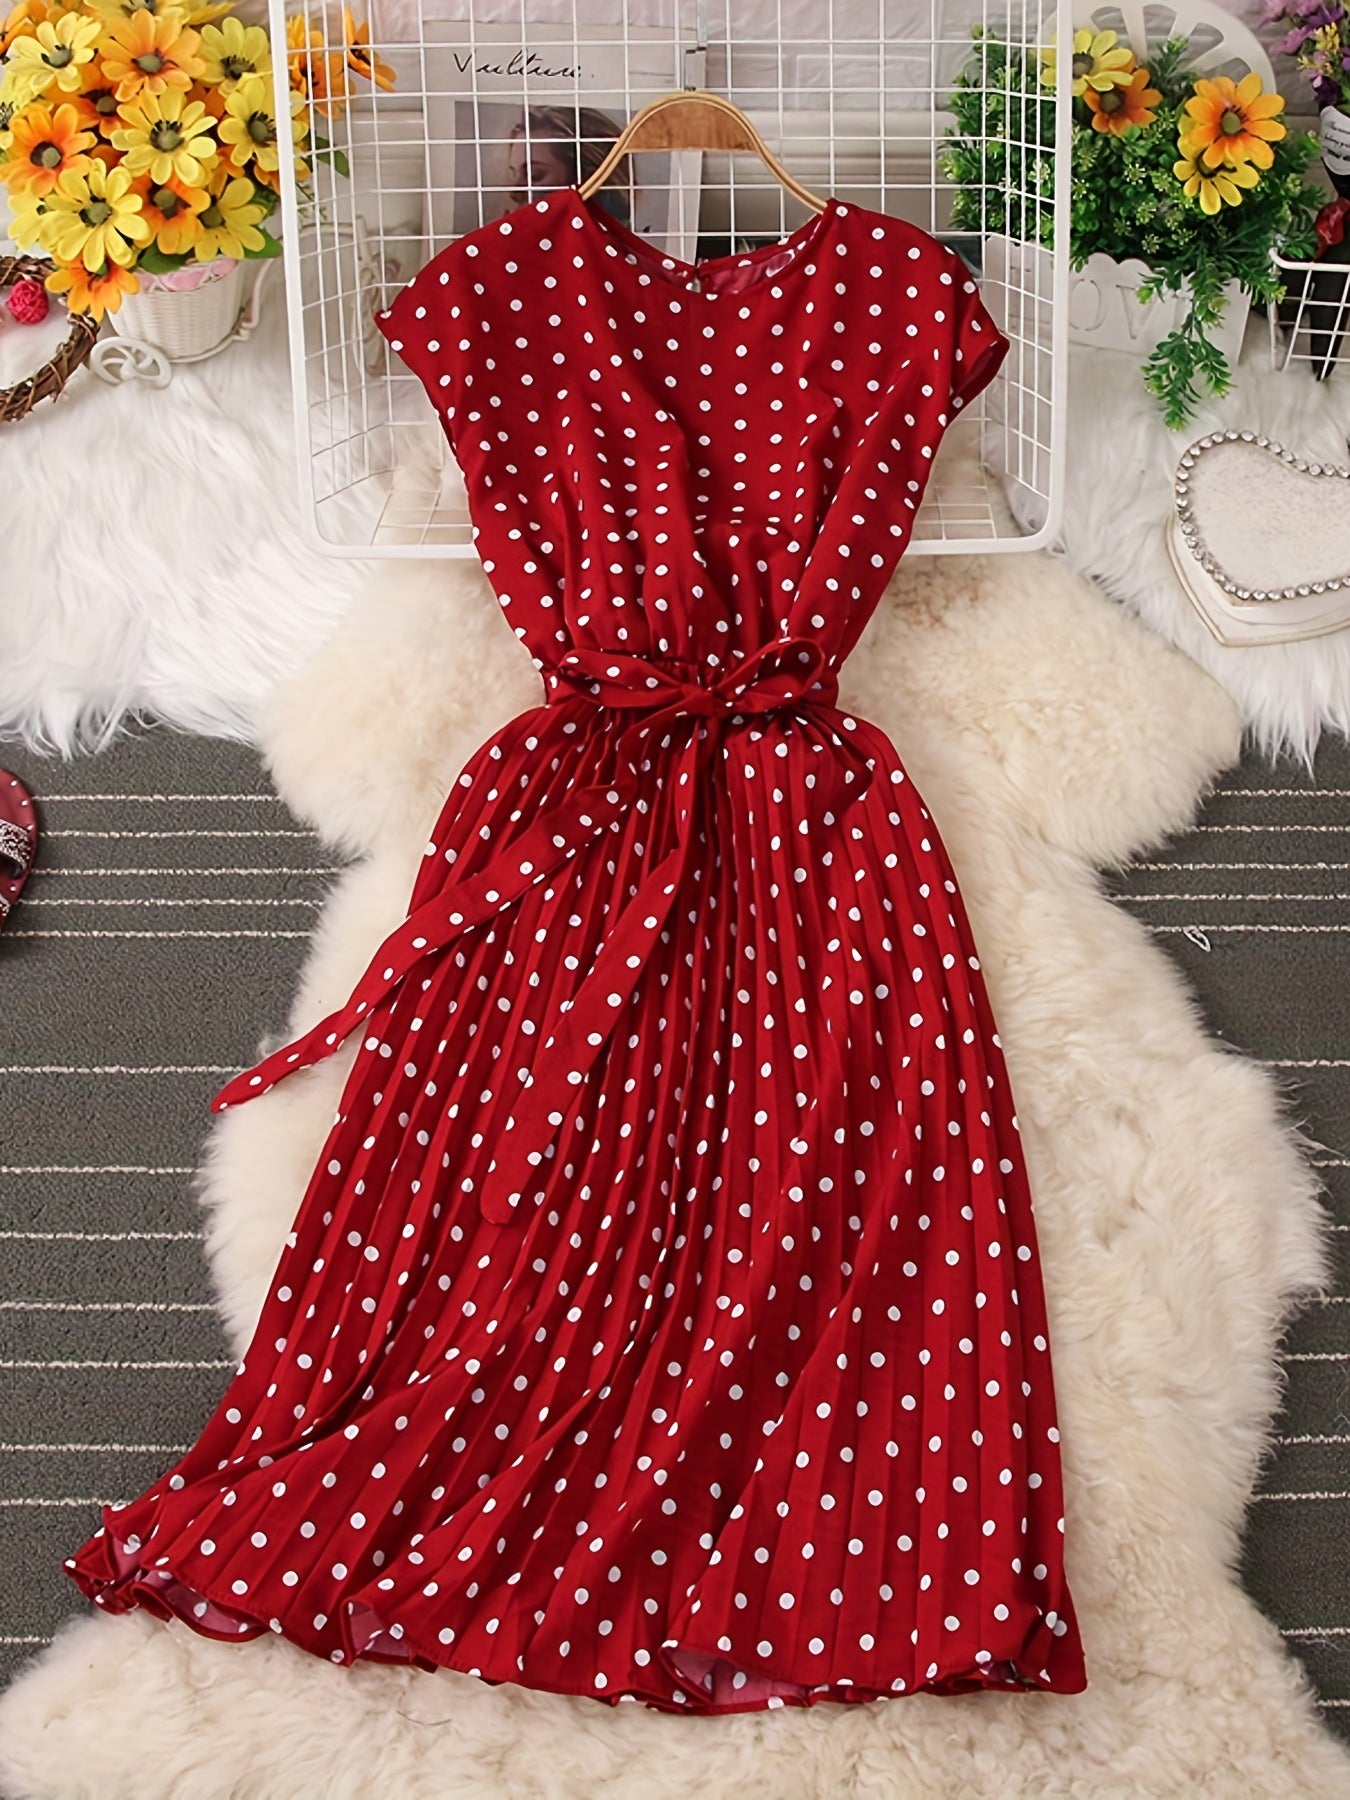 「lovevop」Polka Dot Pleated Dress, Short Sleeve Casual Dress For Spring & Summer, Women's Clothing